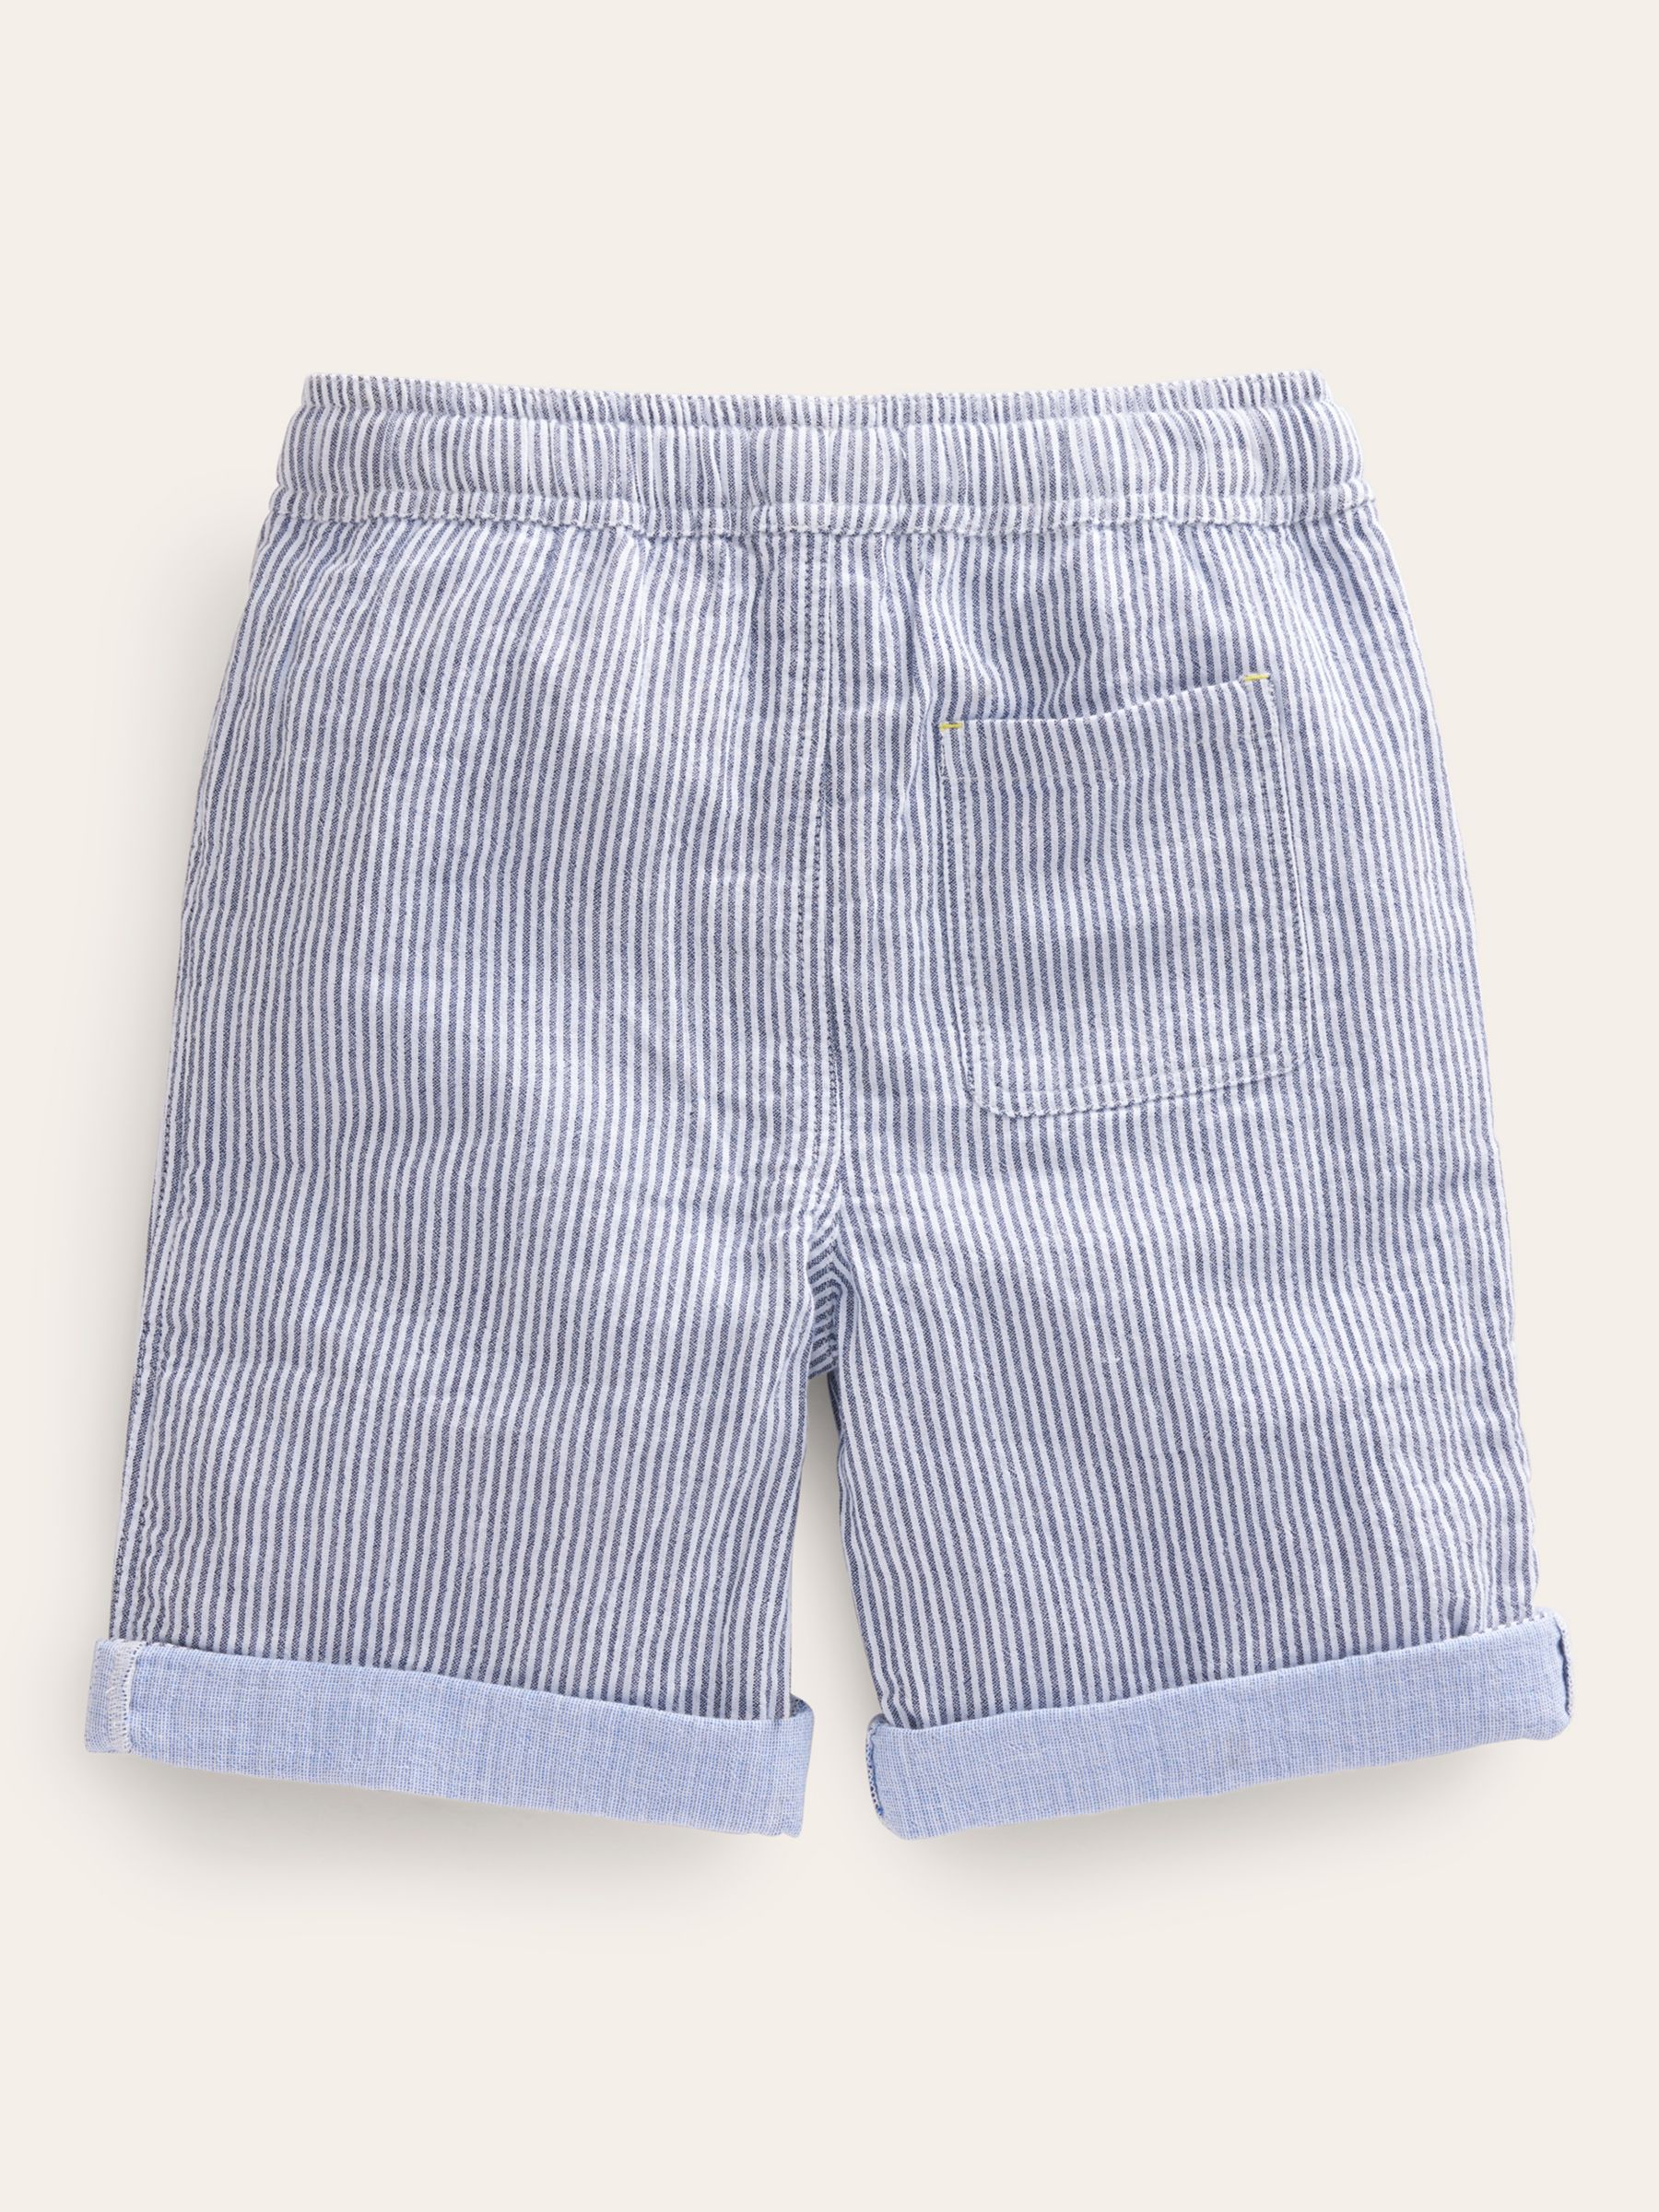 Mini Boden Kids' Stripe Drawstring Lightweight Holiday Shorts, College Navy Ticking, 3 years